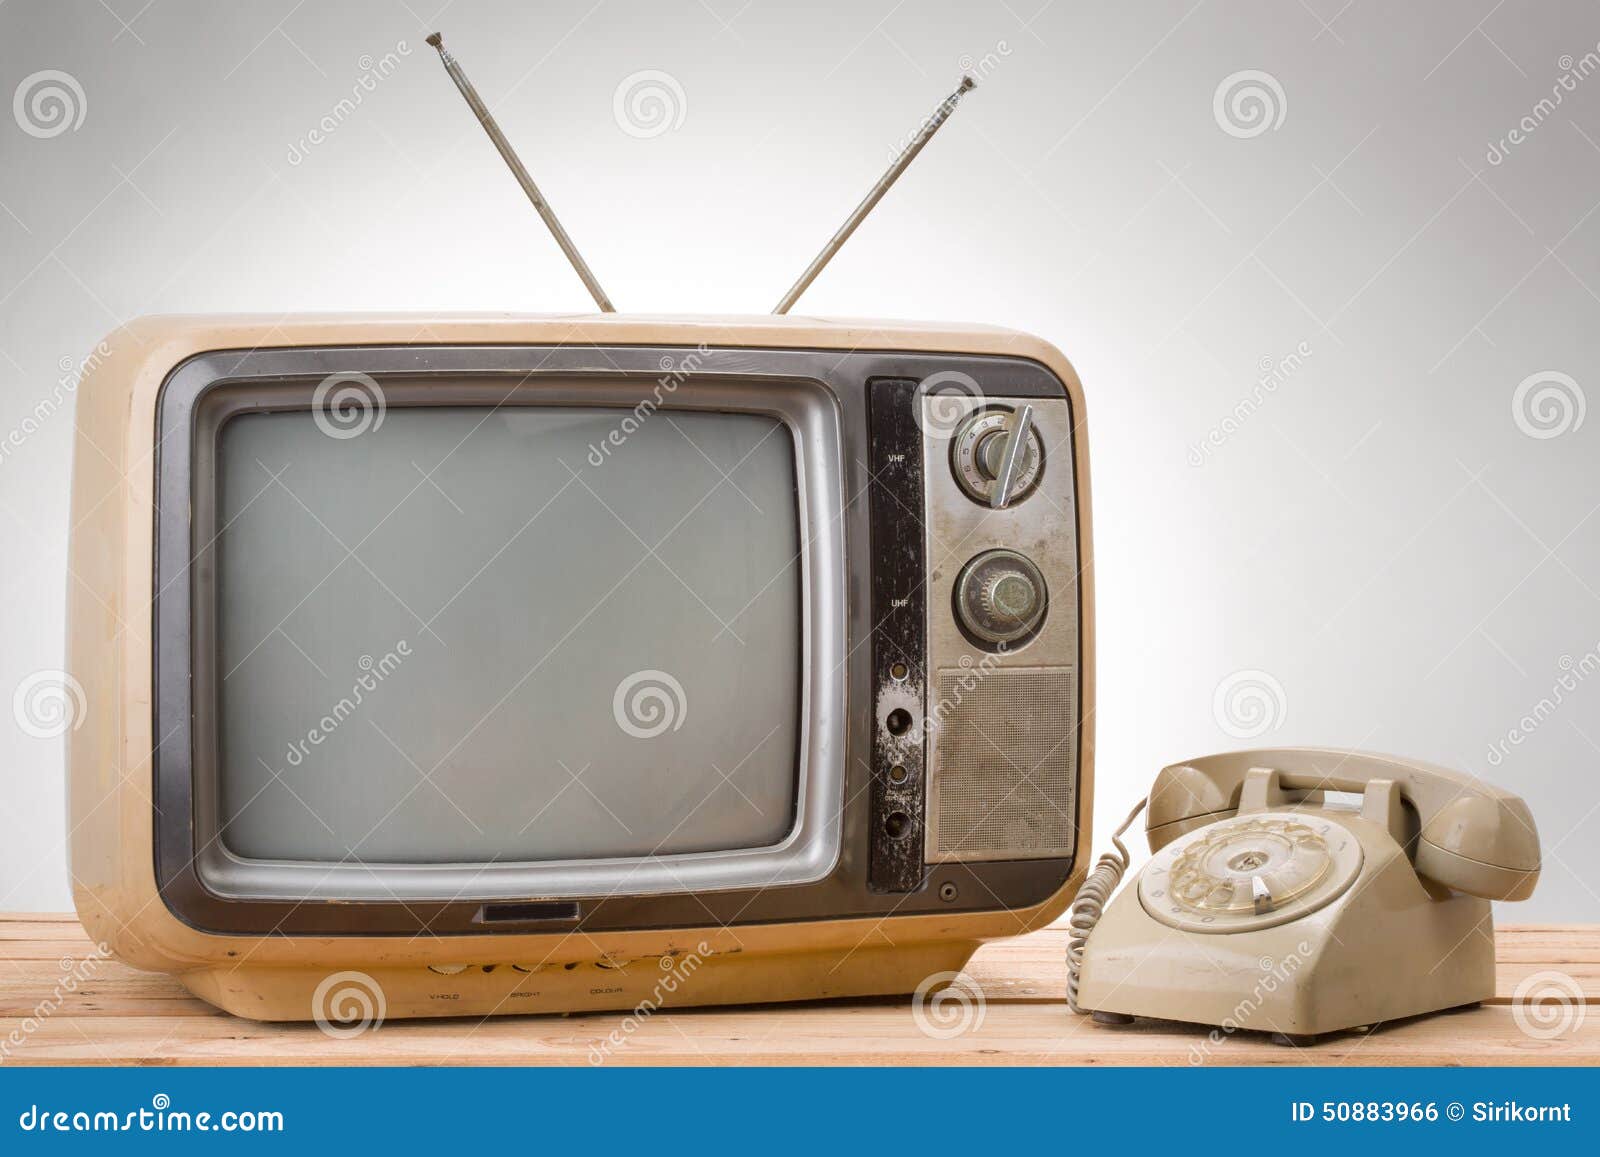 Телефон радио телевидение. Телевизор и радио. Старый маленький телевизор. Телевизор telephone. Старые телефоны с телевизором.